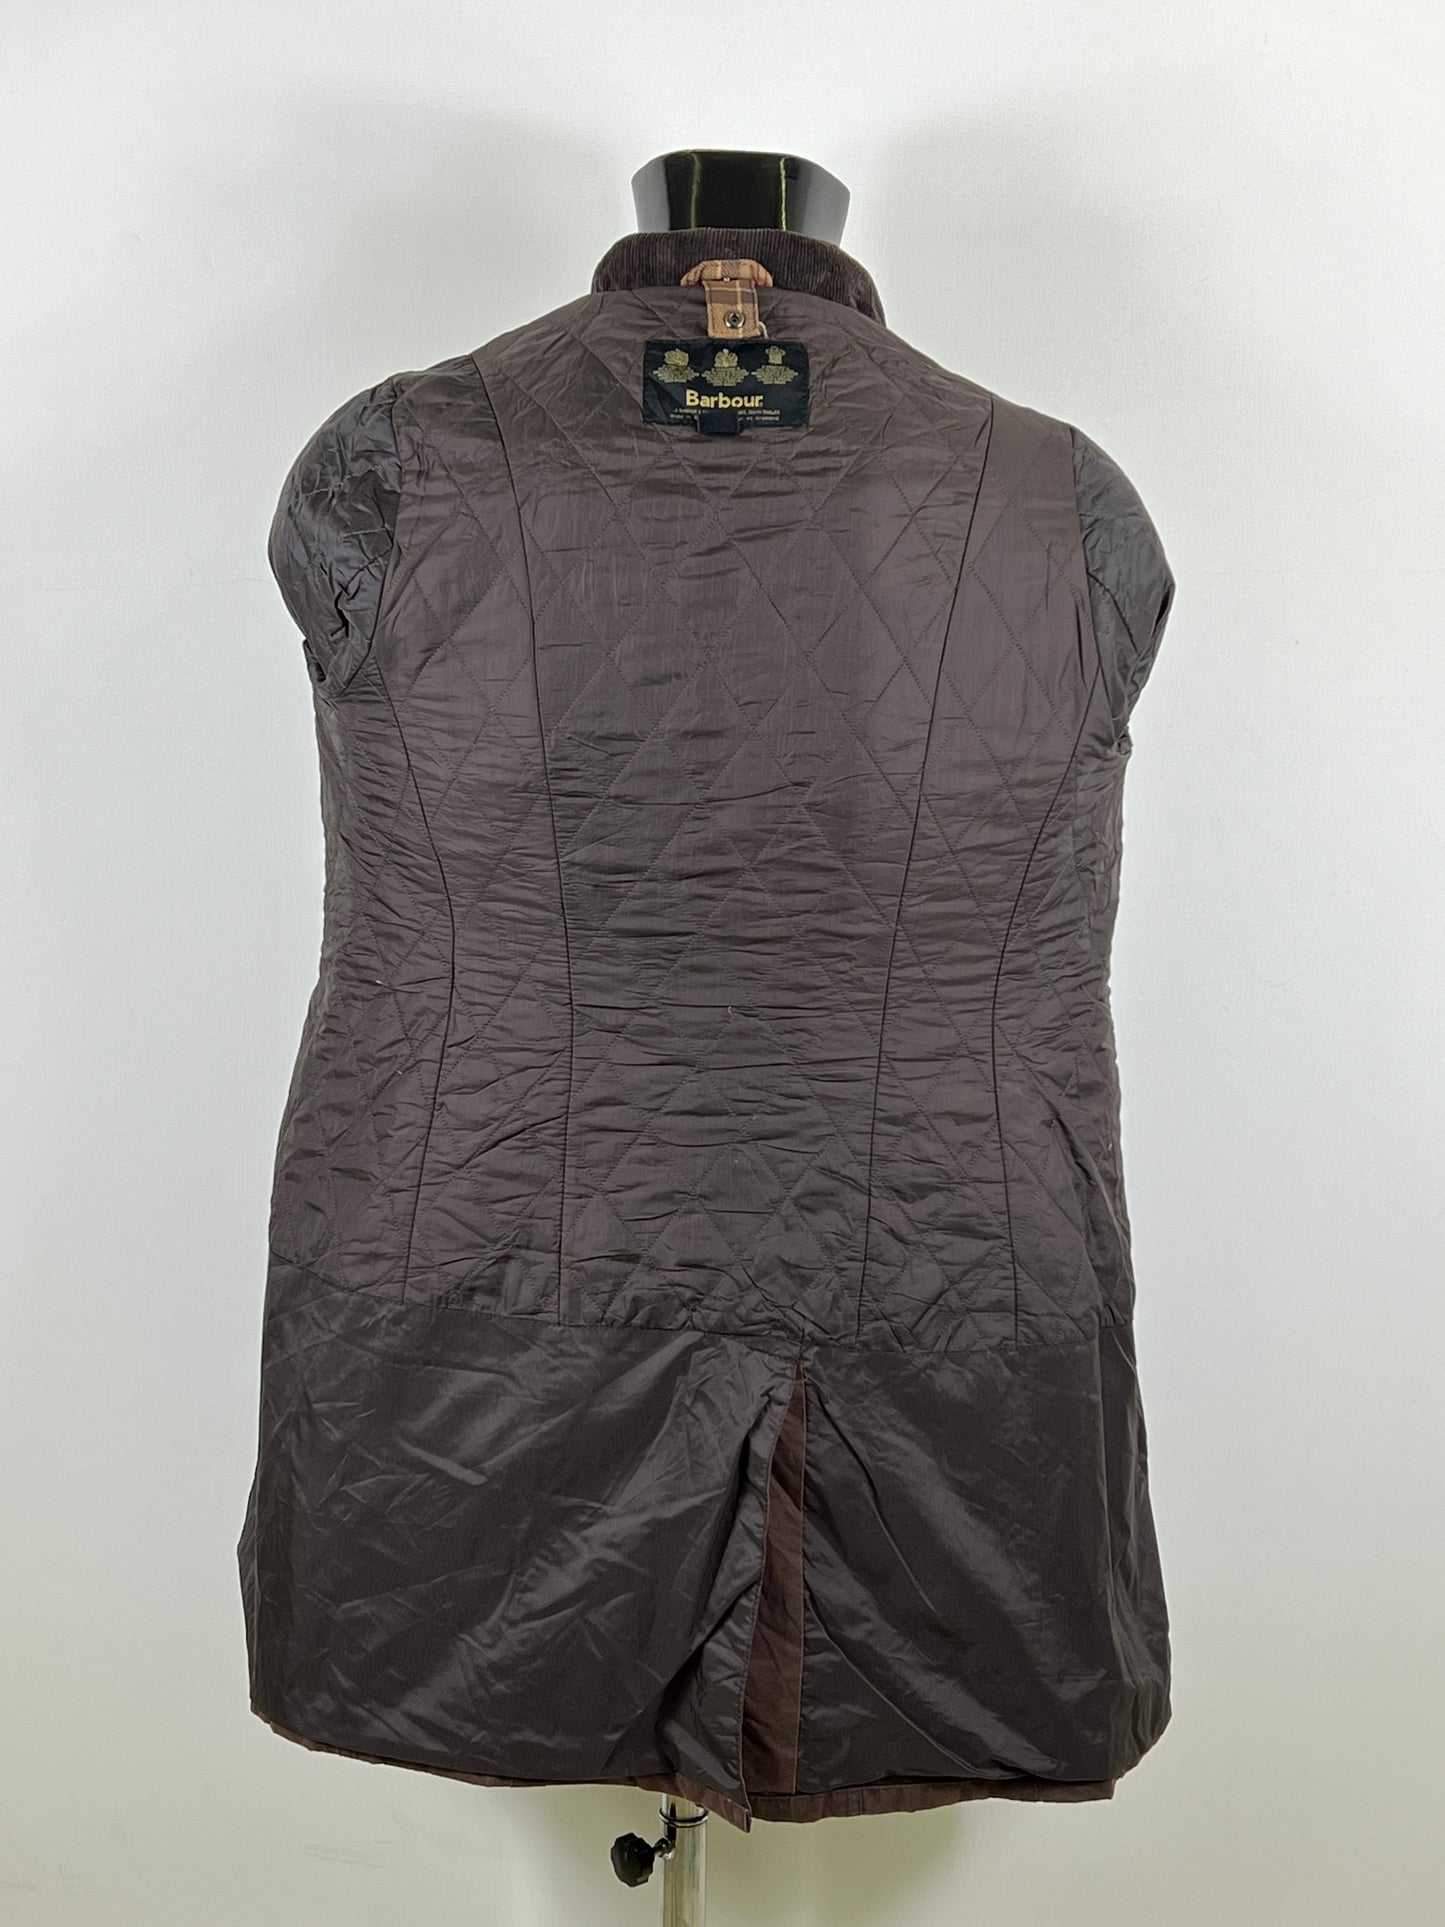 Barbour Giacca marrone da donna Medium Uk12 Tg. 42 Lady Wax Belsay Jacket Size UK12